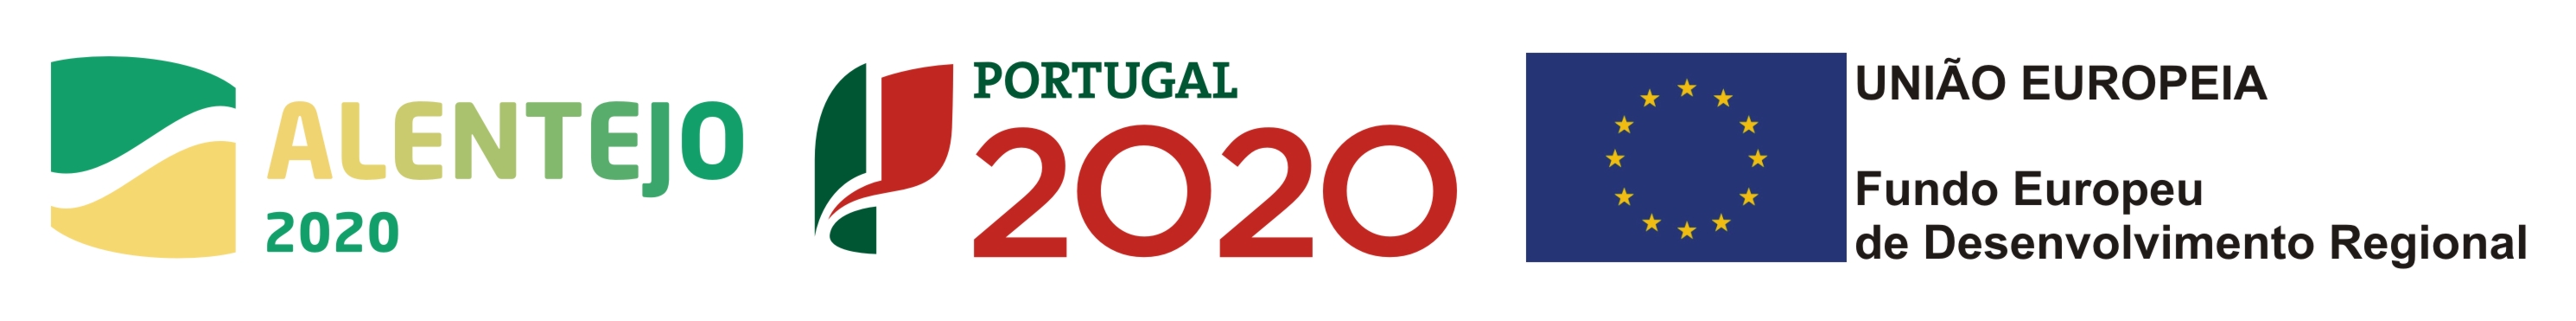 Portugal 2020 barra 3 Logotipos